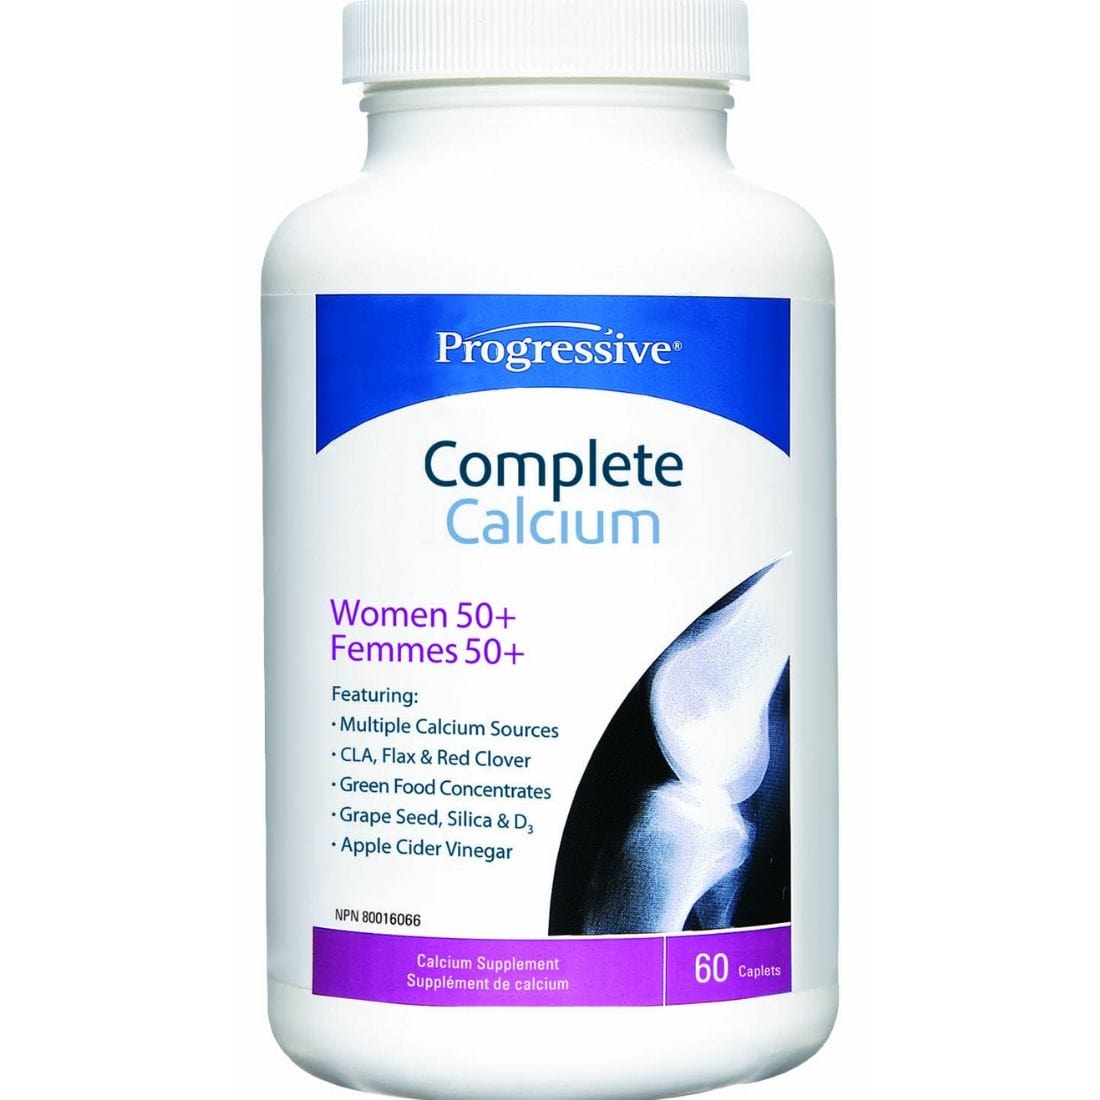 Progressive Complete Calcium For Women 50+